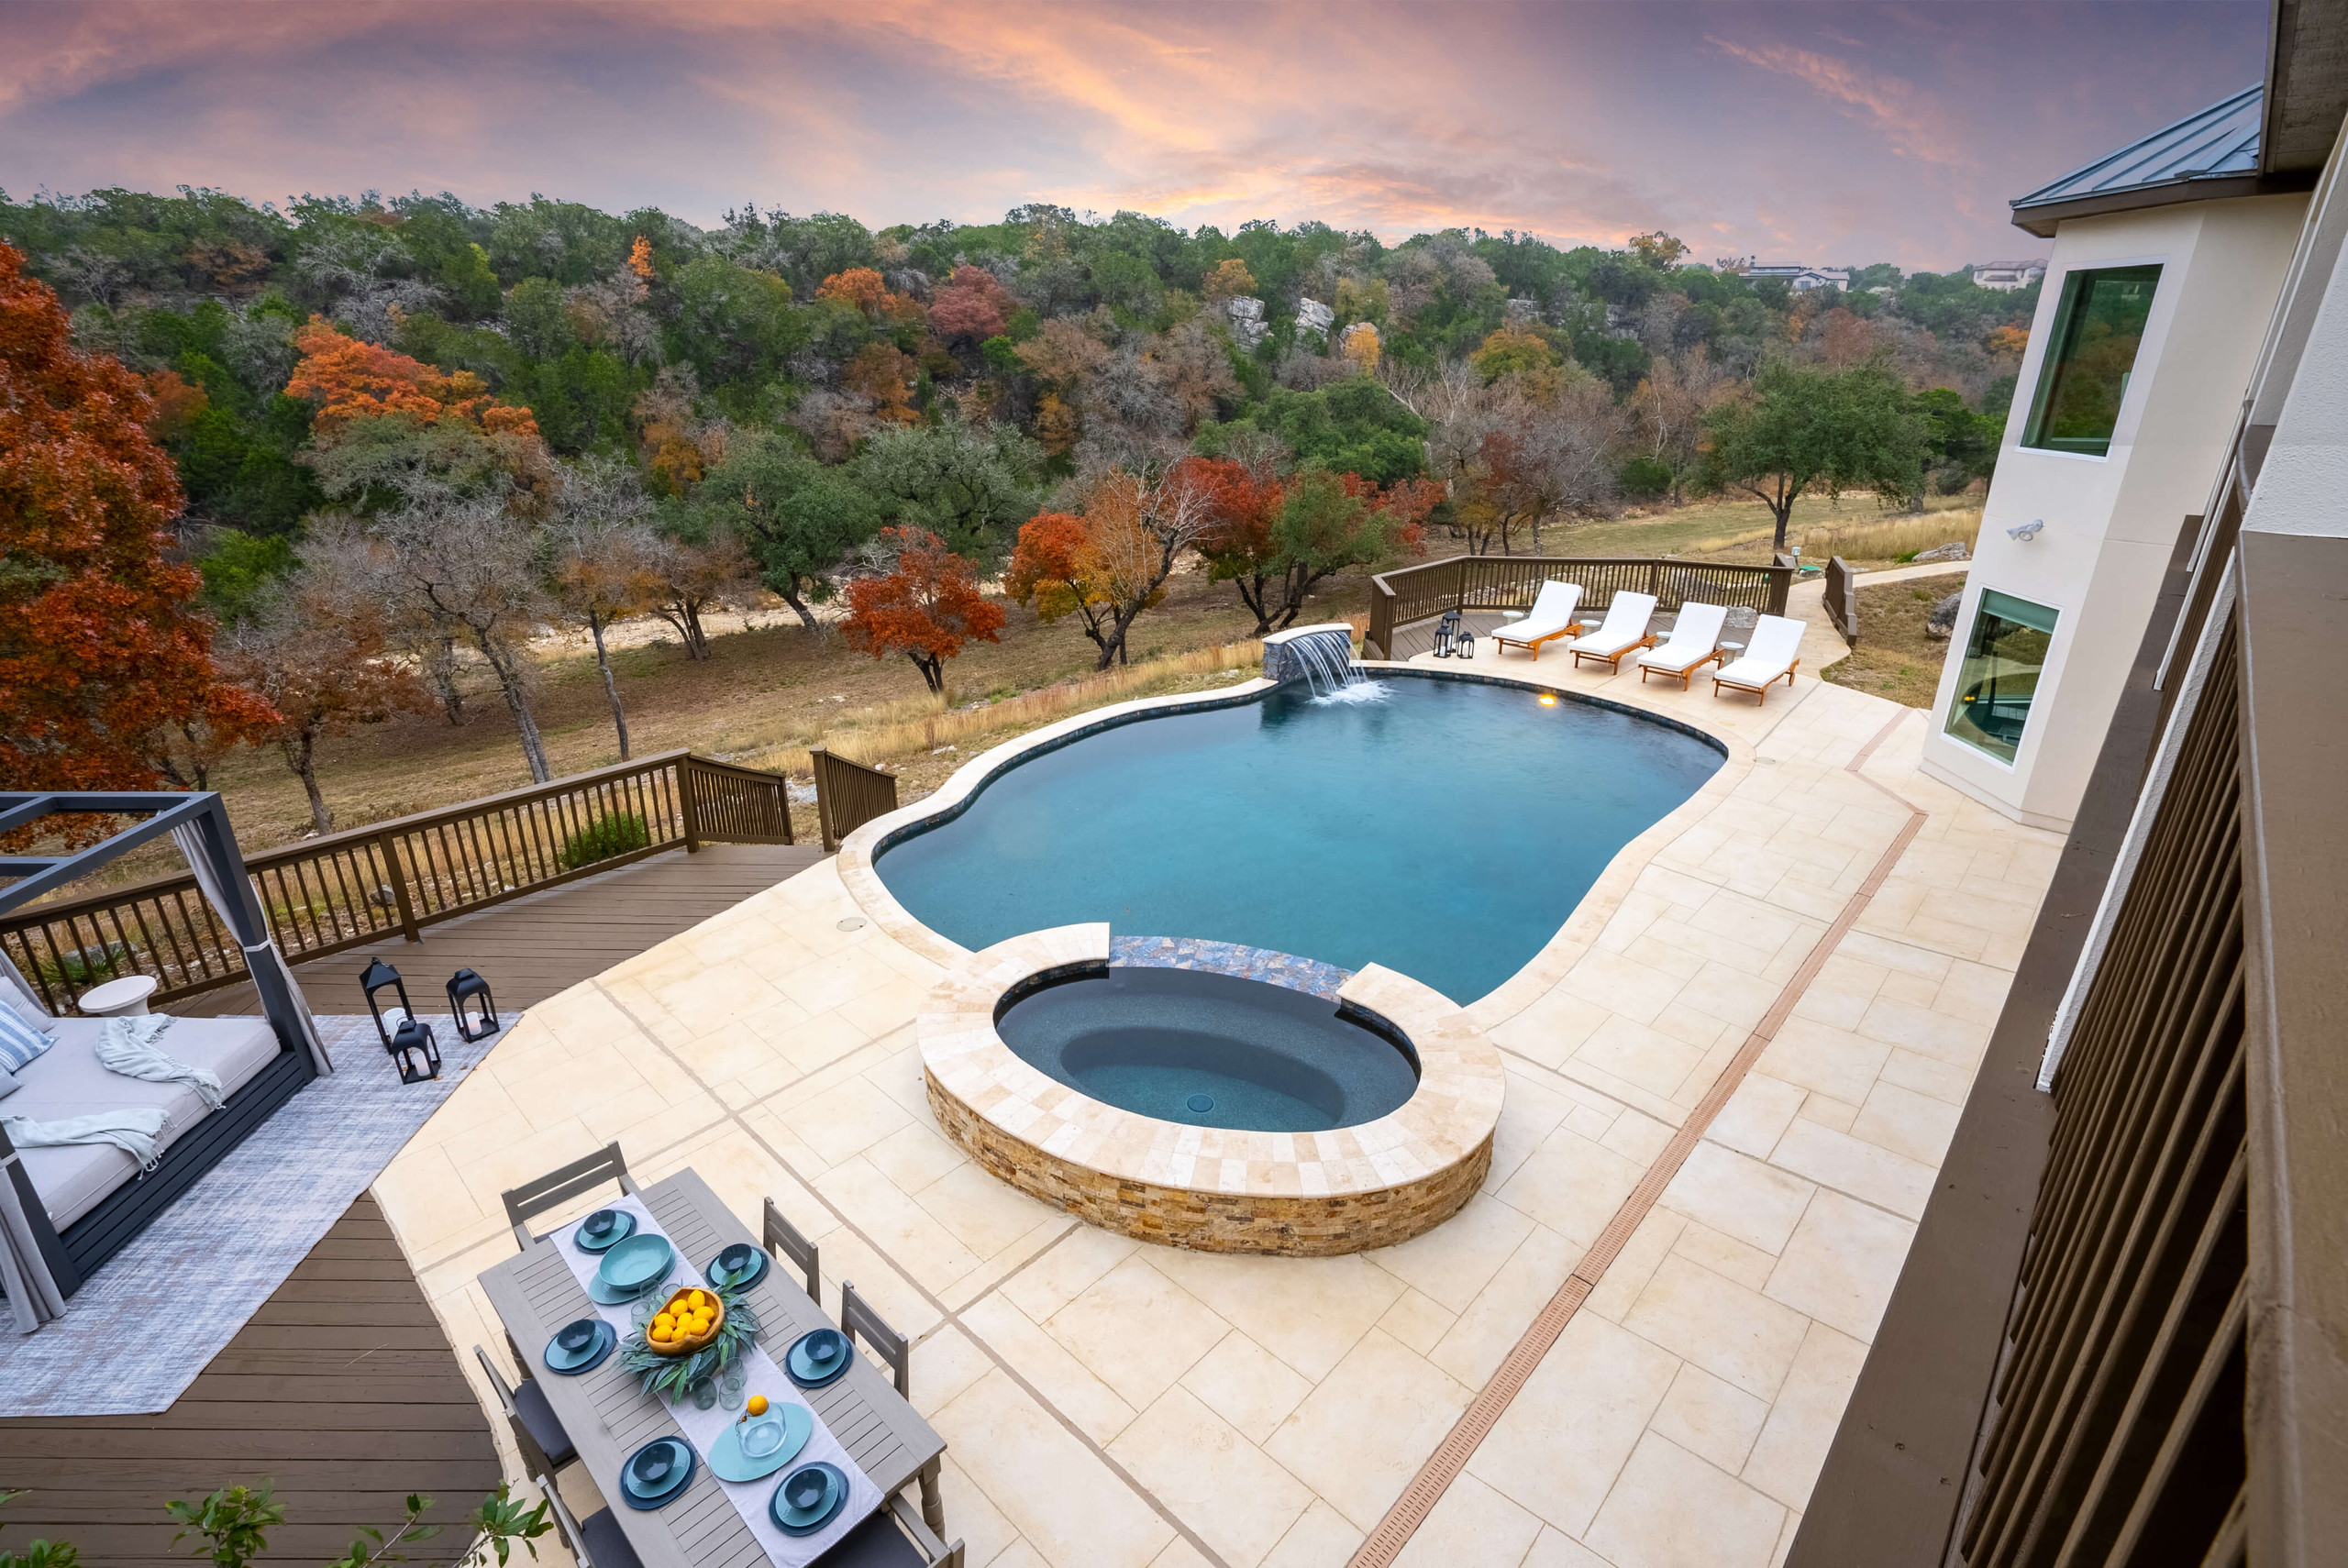 backyard custom pool remodel carvestone overlay pool deck texas hill country san antonio